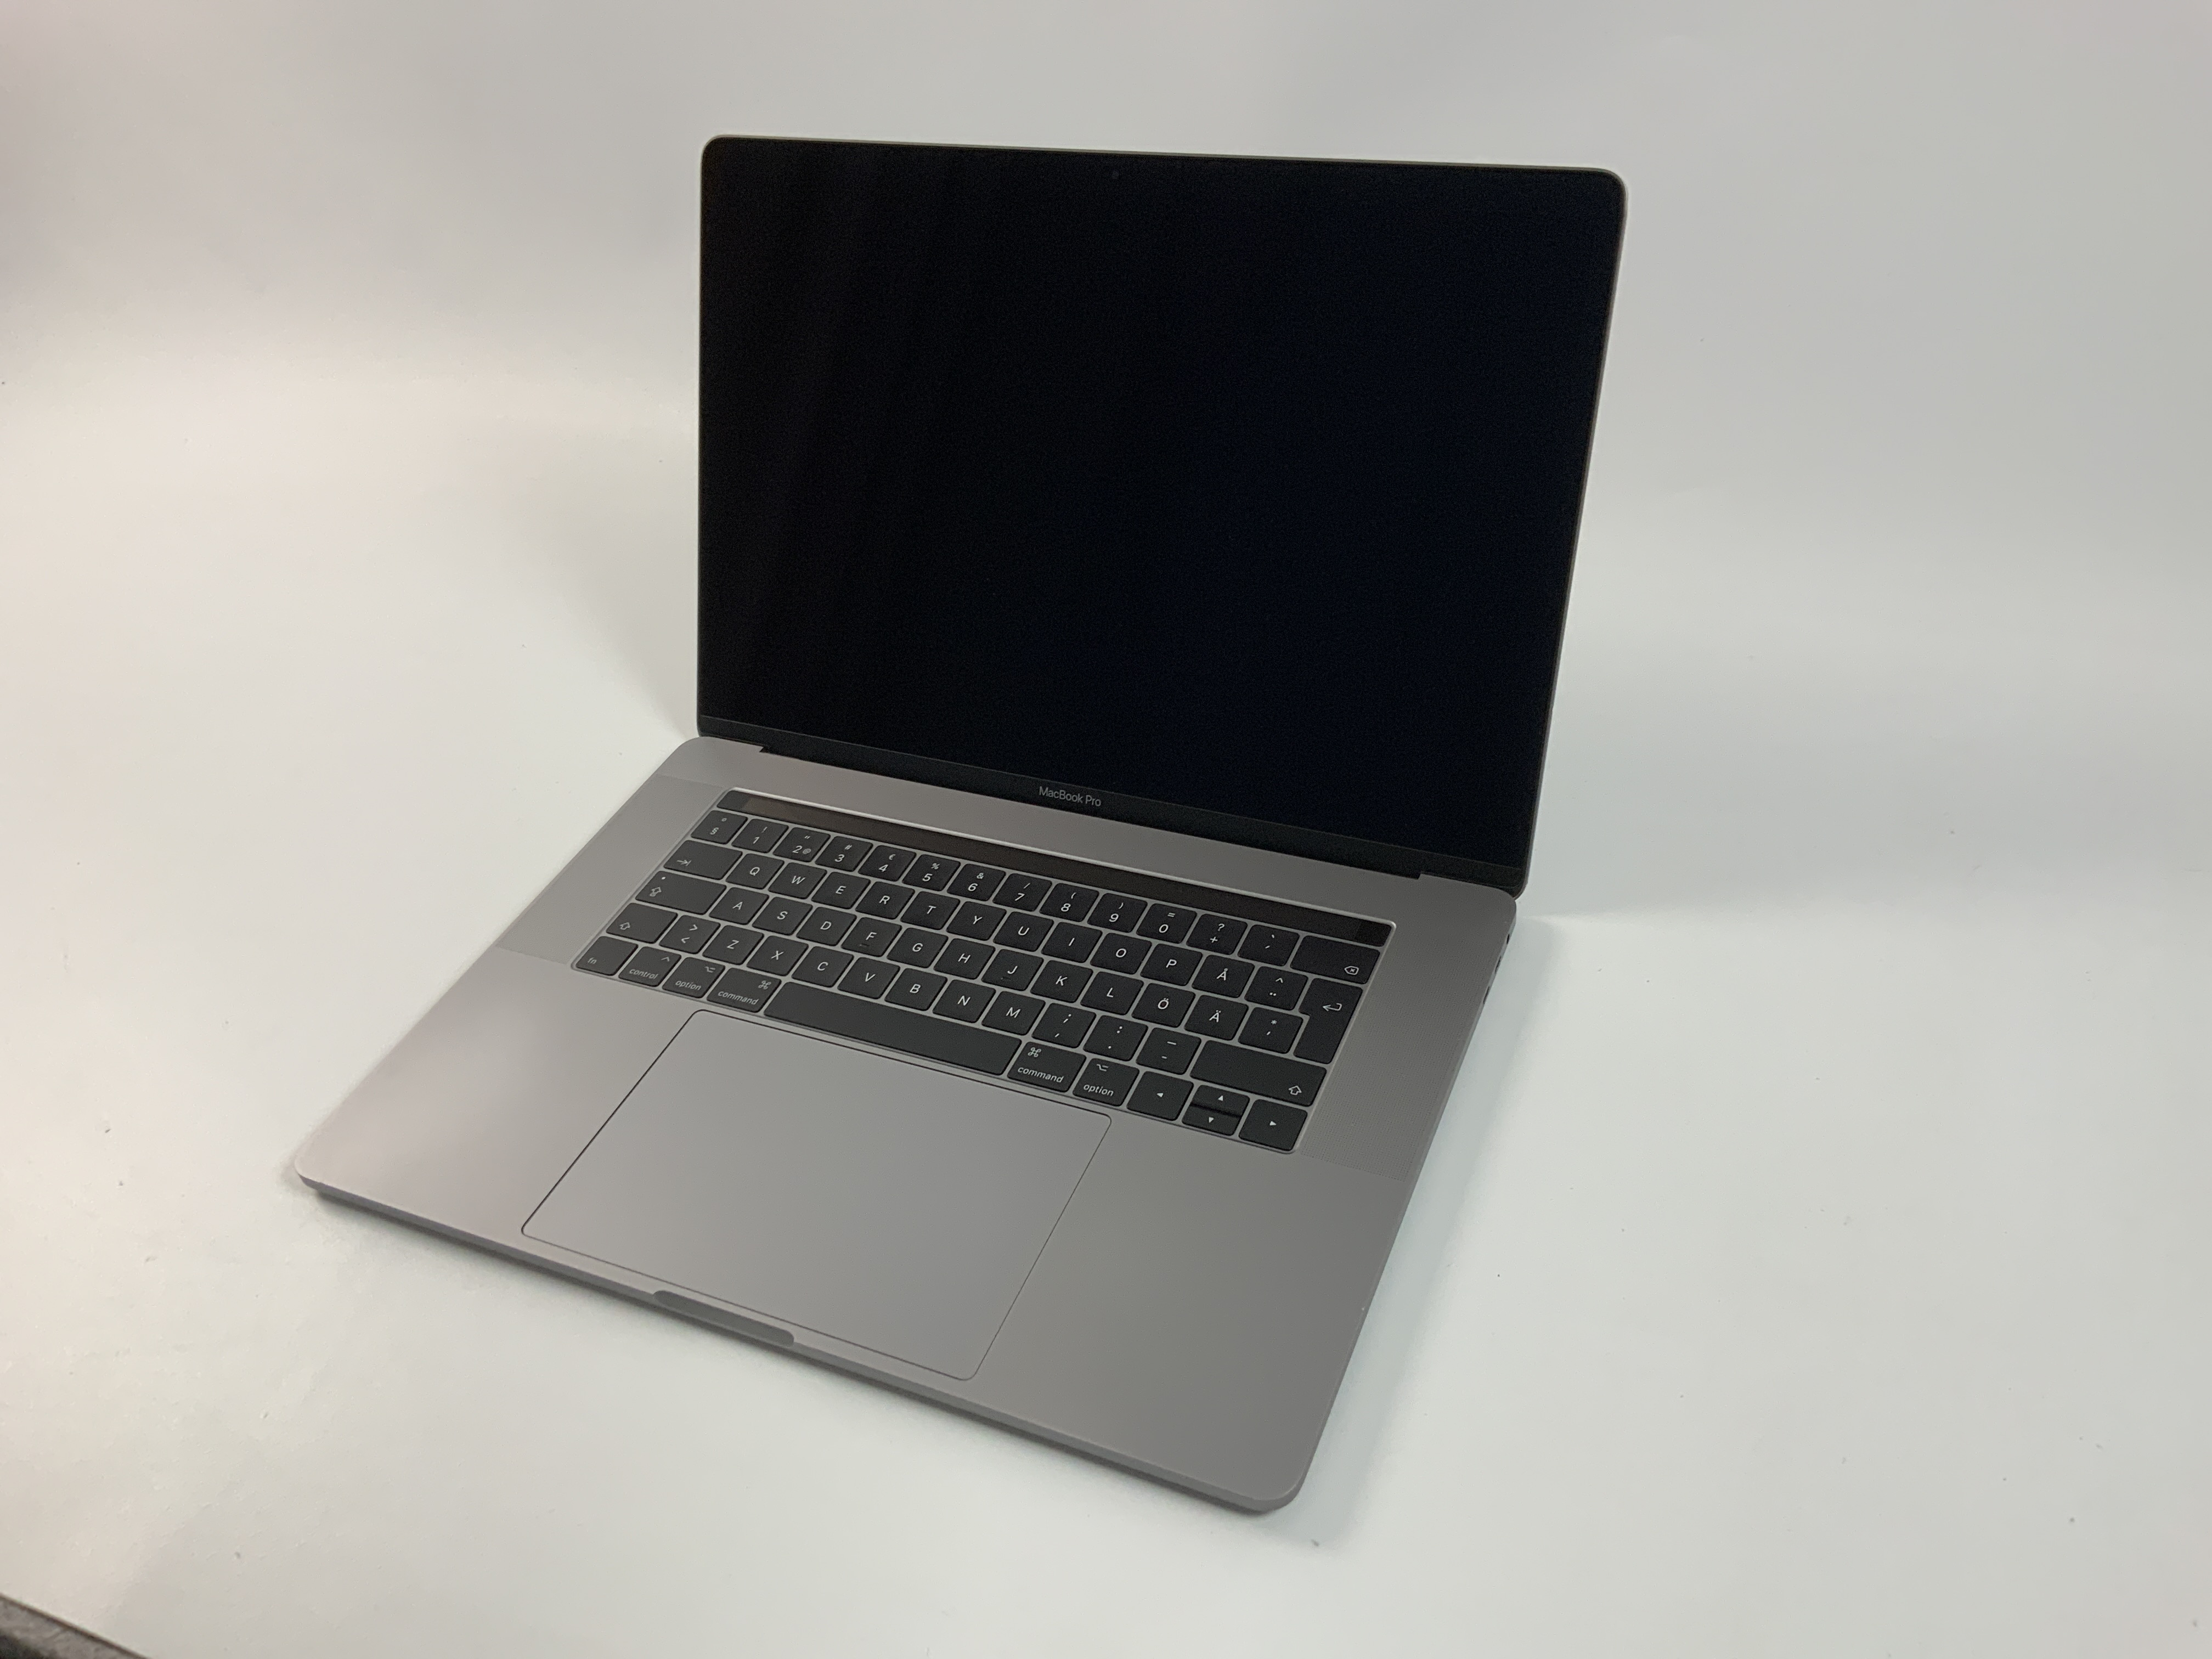 MacBook Pro 15" Touch Bar Late 2016 (Intel Quad-Core i7 2.6 GHz 16 GB RAM 256 GB SSD), Space Gray, Intel Quad-Core i7 2.6 GHz, 16 GB RAM, 256 GB SSD, Afbeelding 1